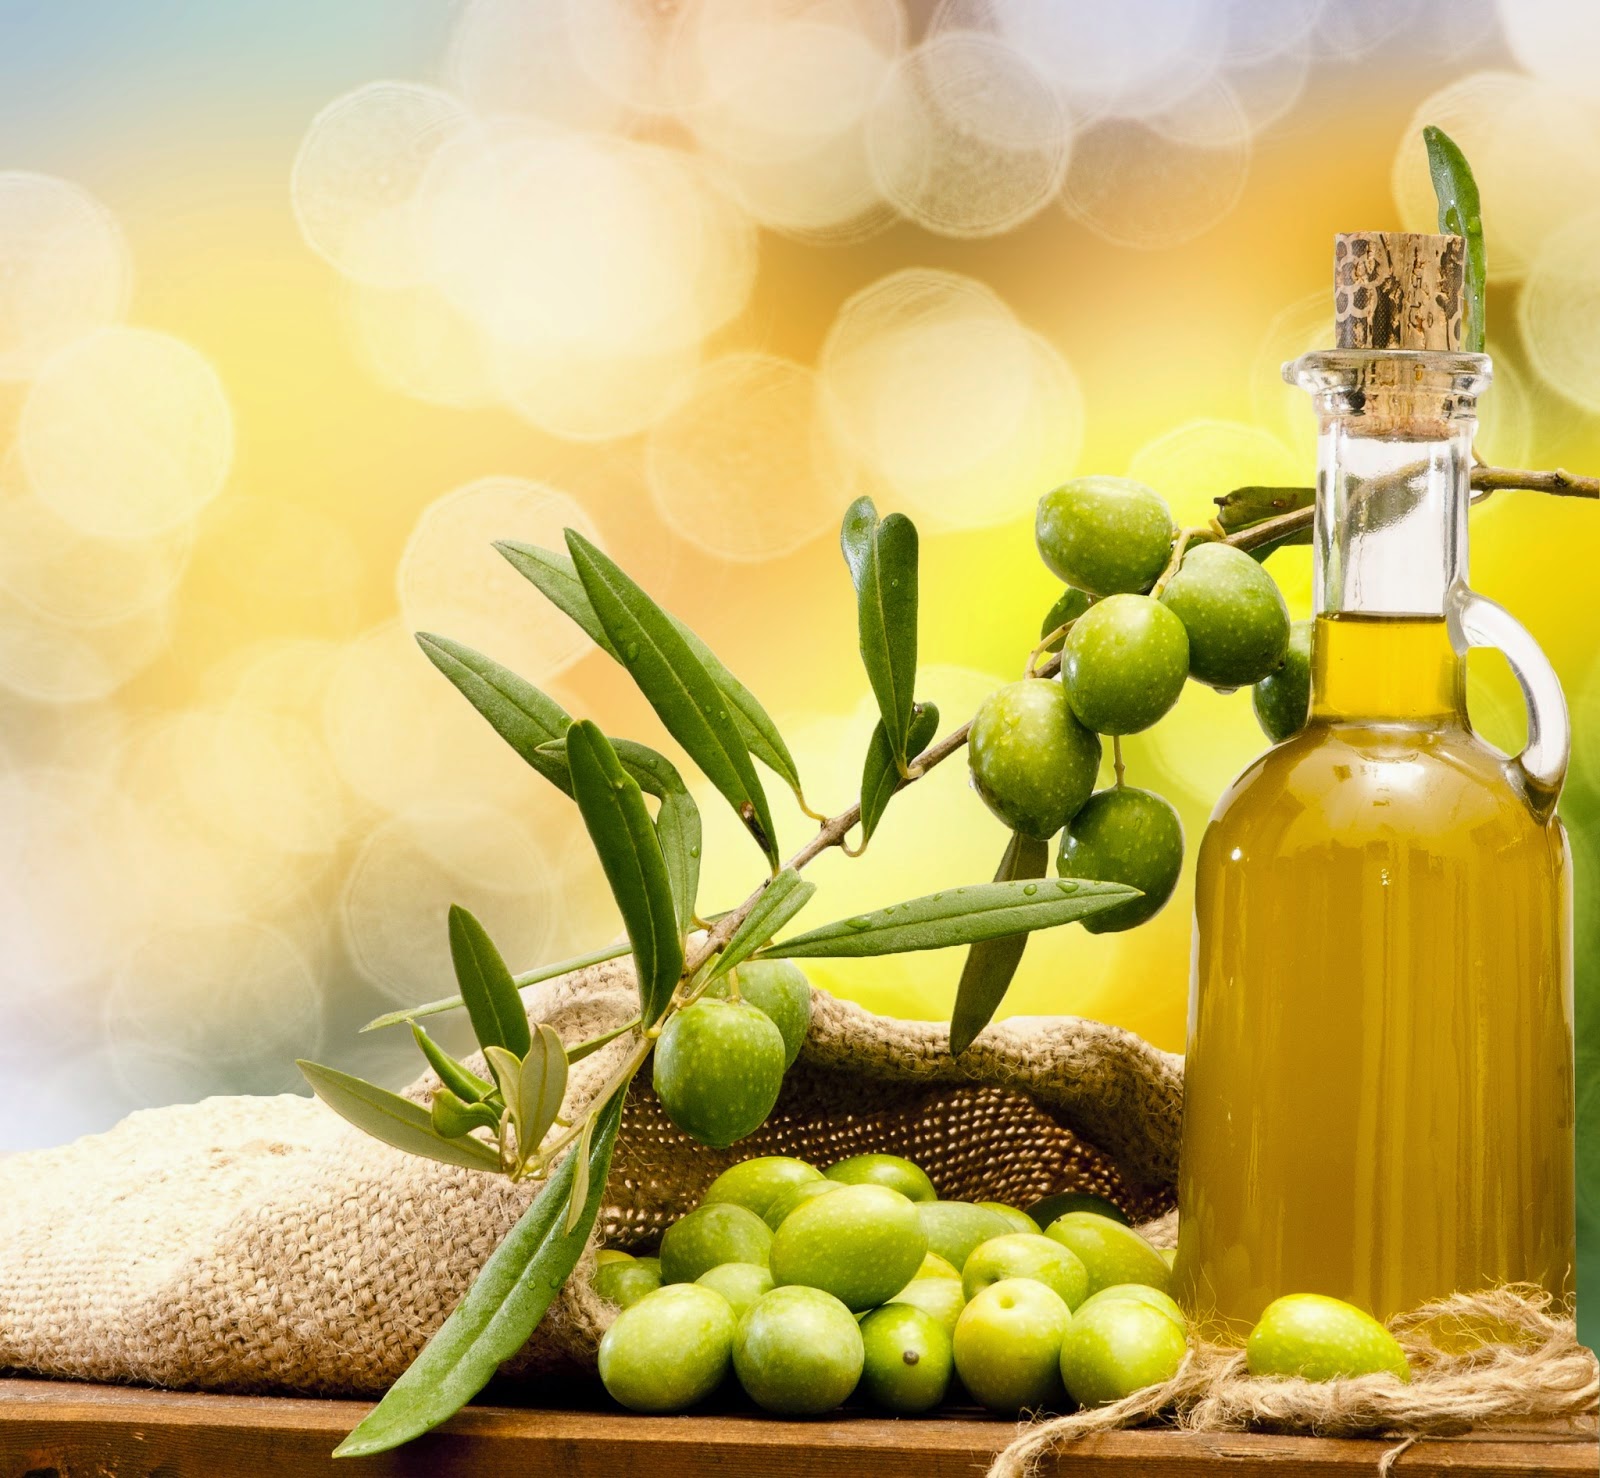  olive oil